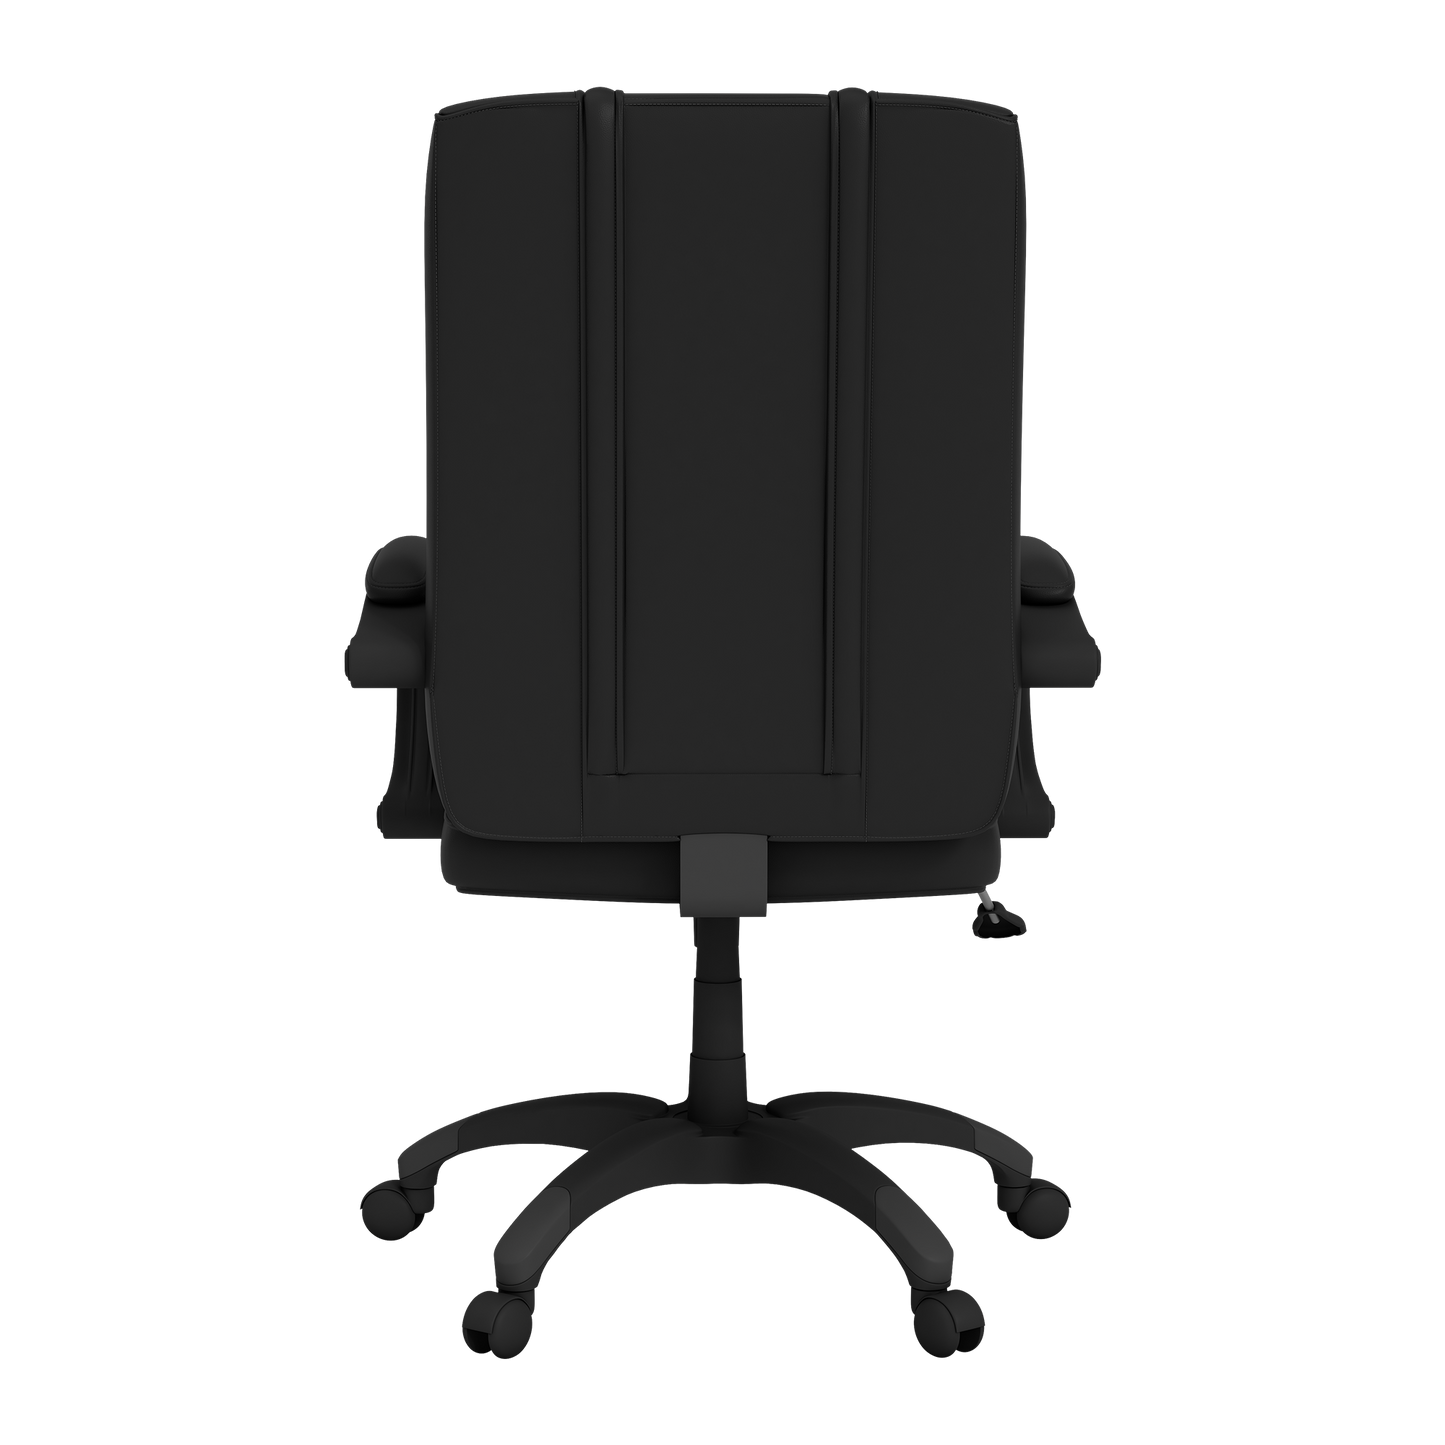 Office Chair 1000 with University of North Dakota Primary Logo